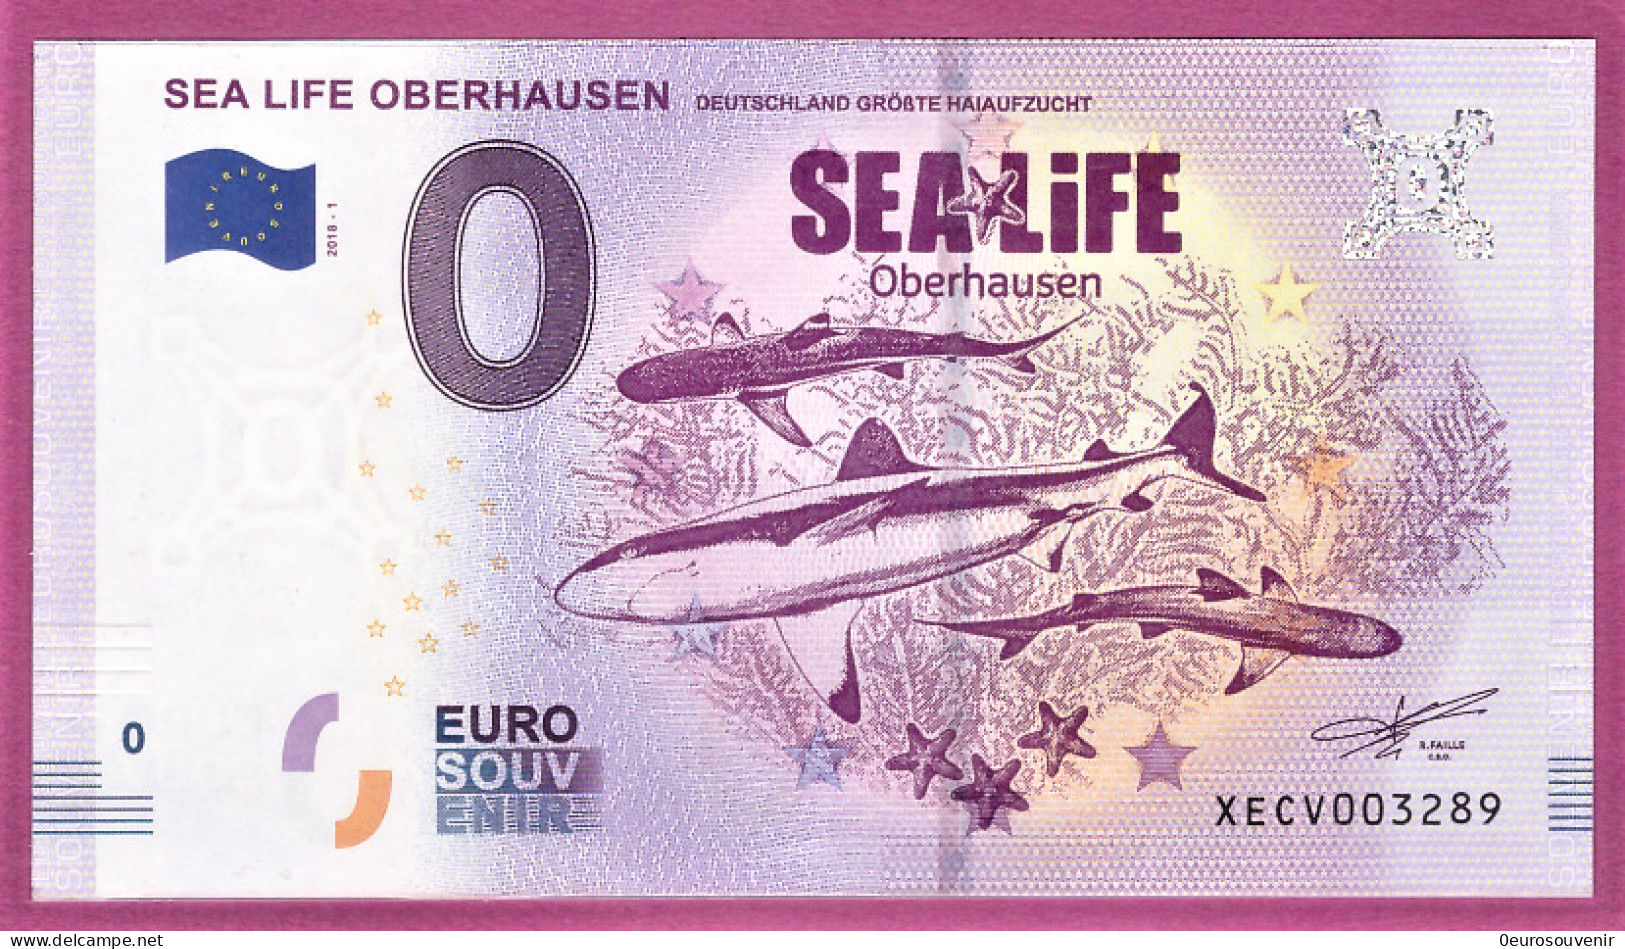 0-Euro XECV 2018-1 SEA LIFE OBERHAUSEN DEUTSCHLAND GRÖẞTE HAIAUFZUCHT - Private Proofs / Unofficial